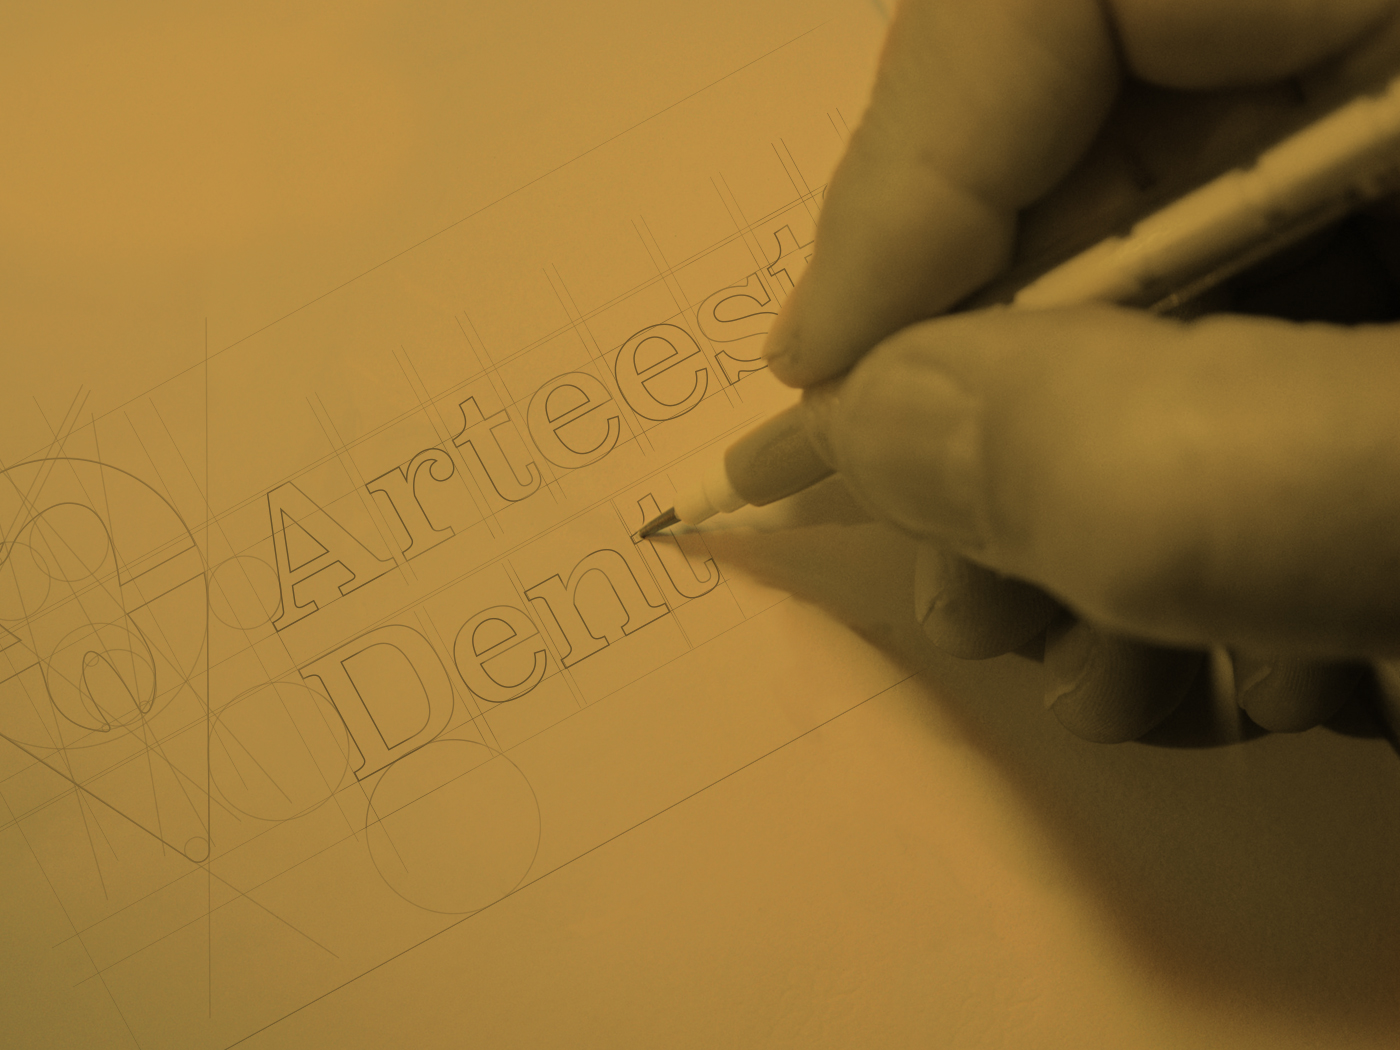 Arteestic Dental logo development process with hand sketching the design